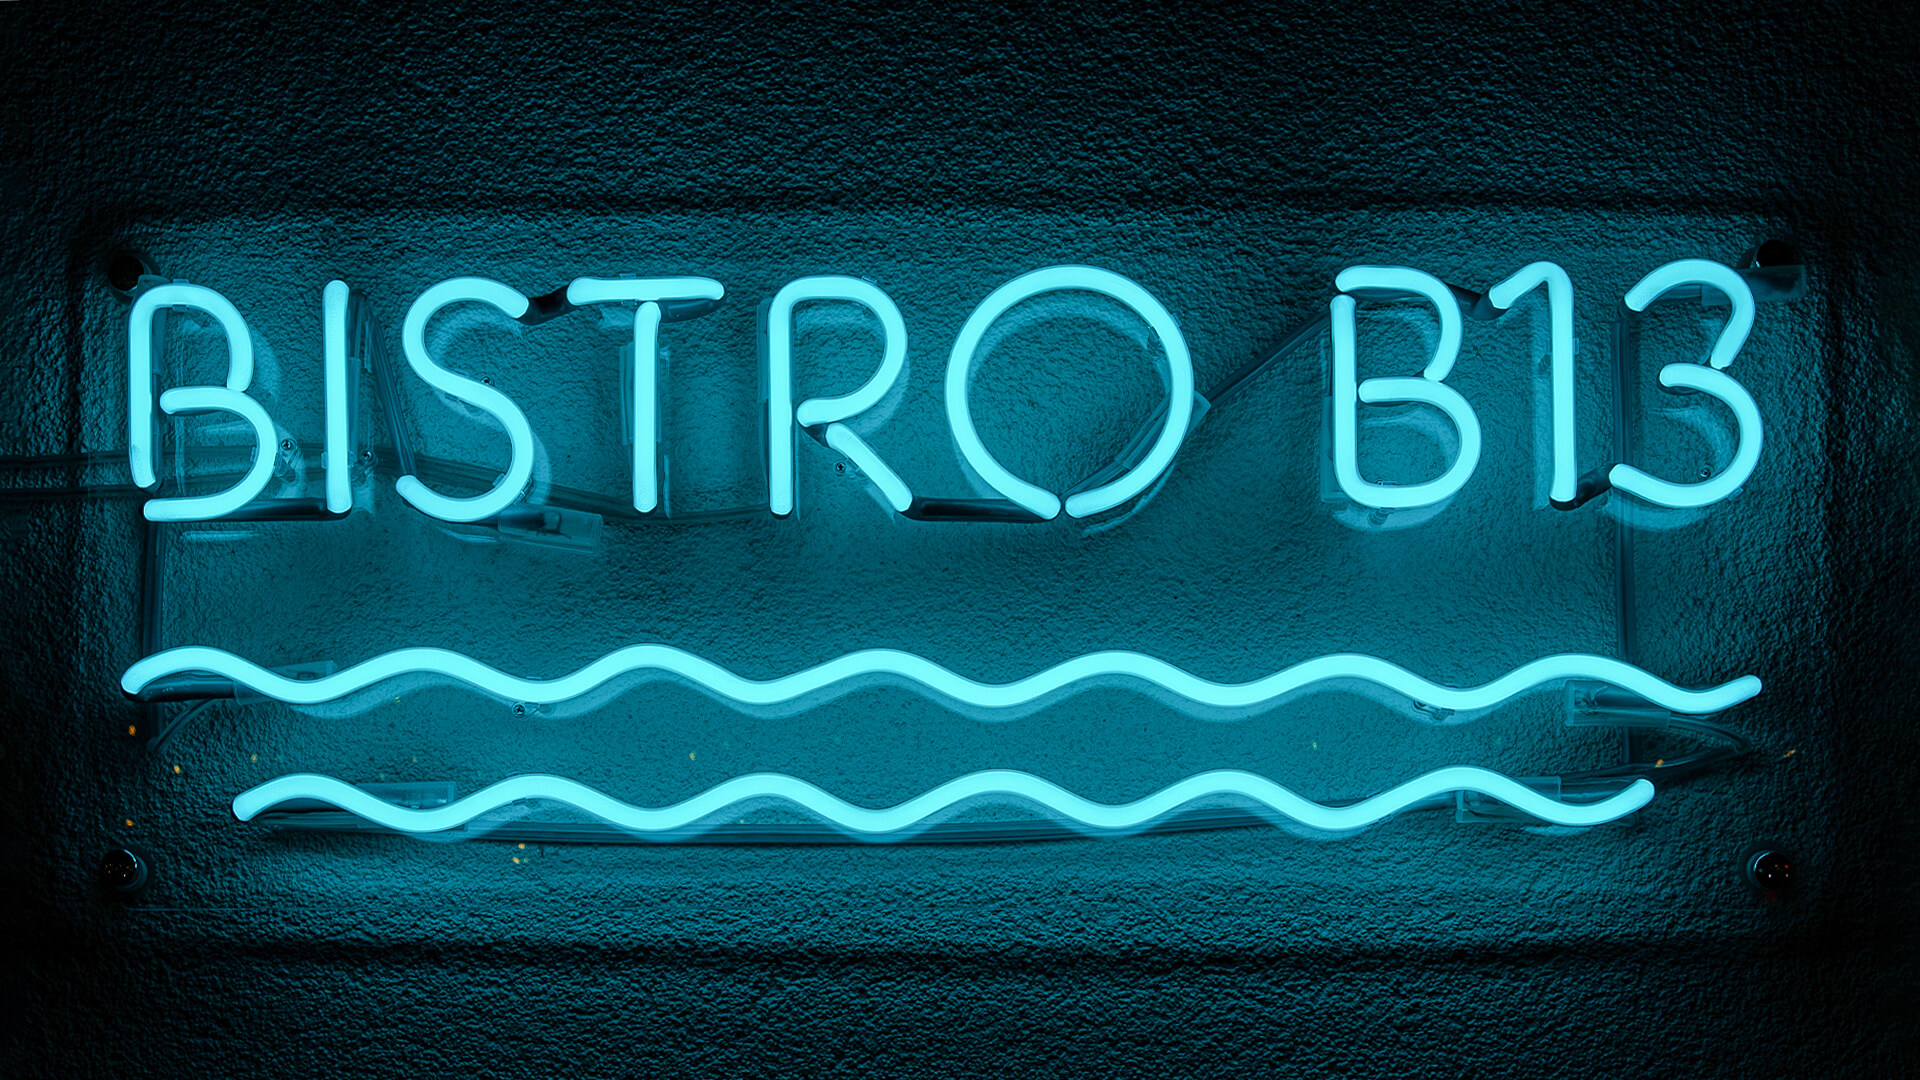 Bistro B13 - Bistro neon glass turquoise.